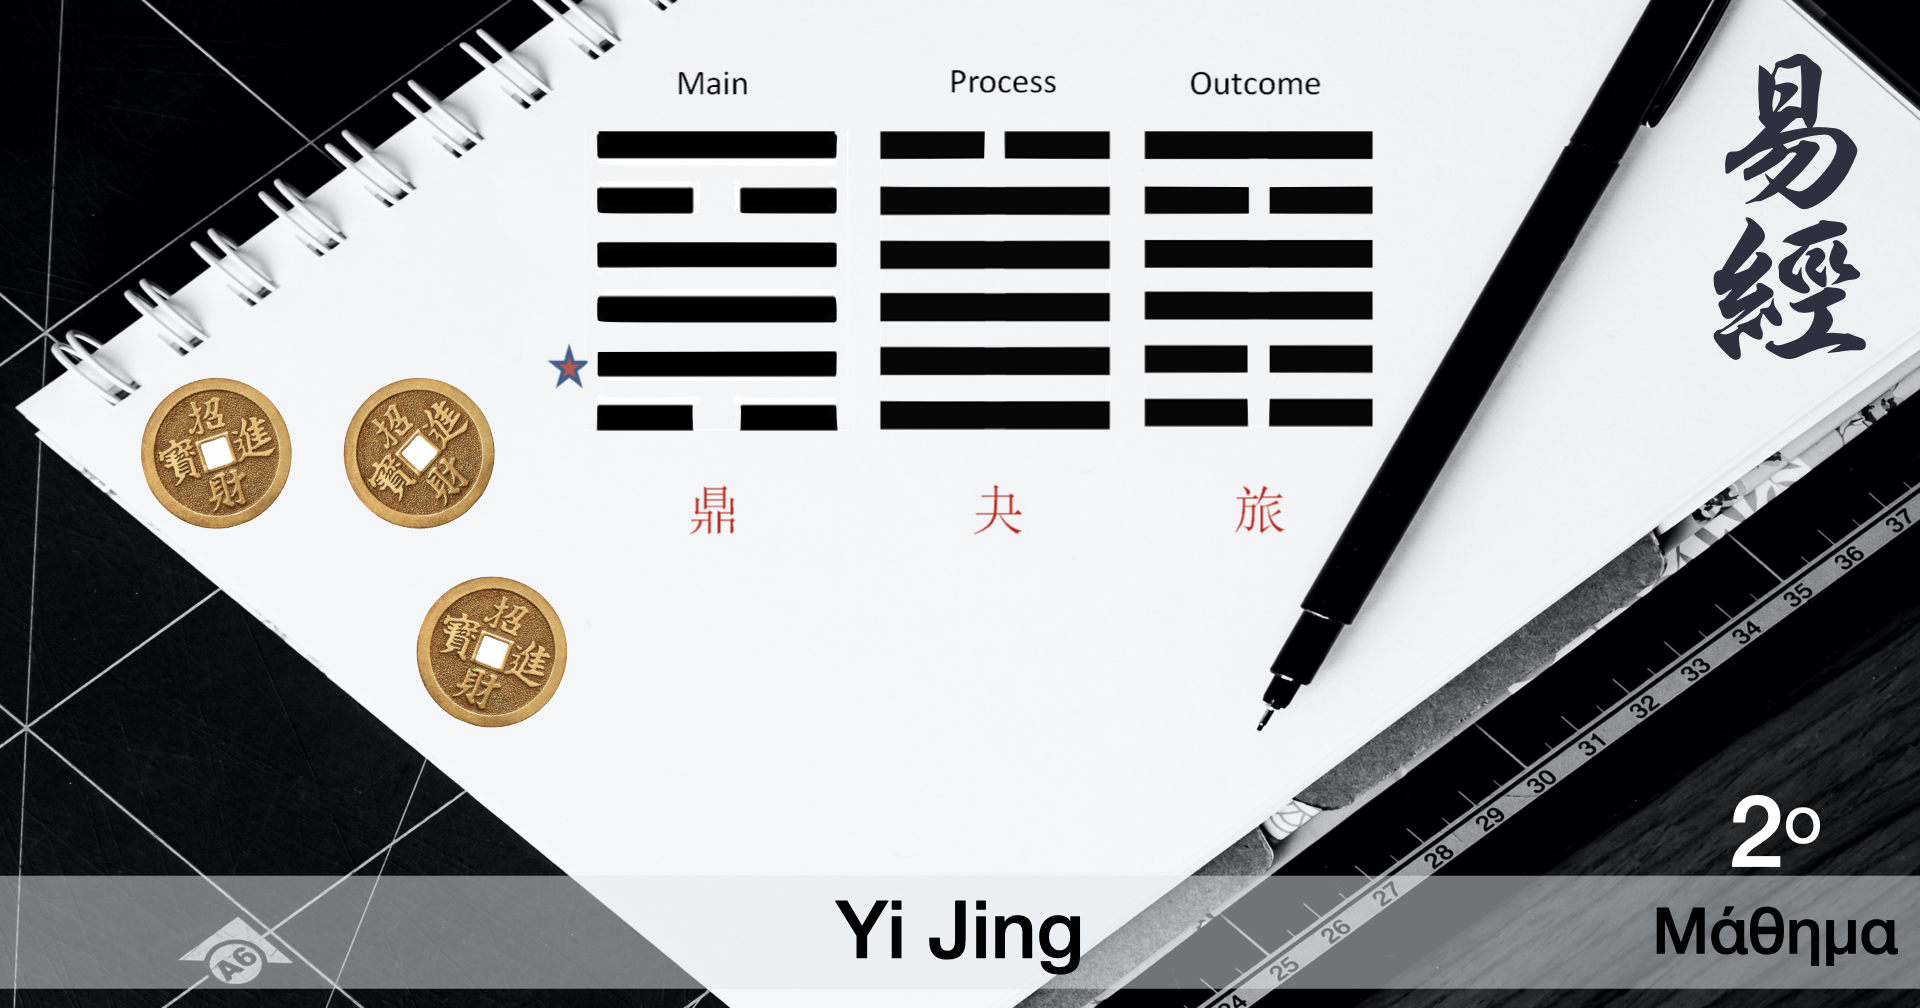 I Ching - Yi Jing Μέθοδος Πρόβλεψης με το I Ching